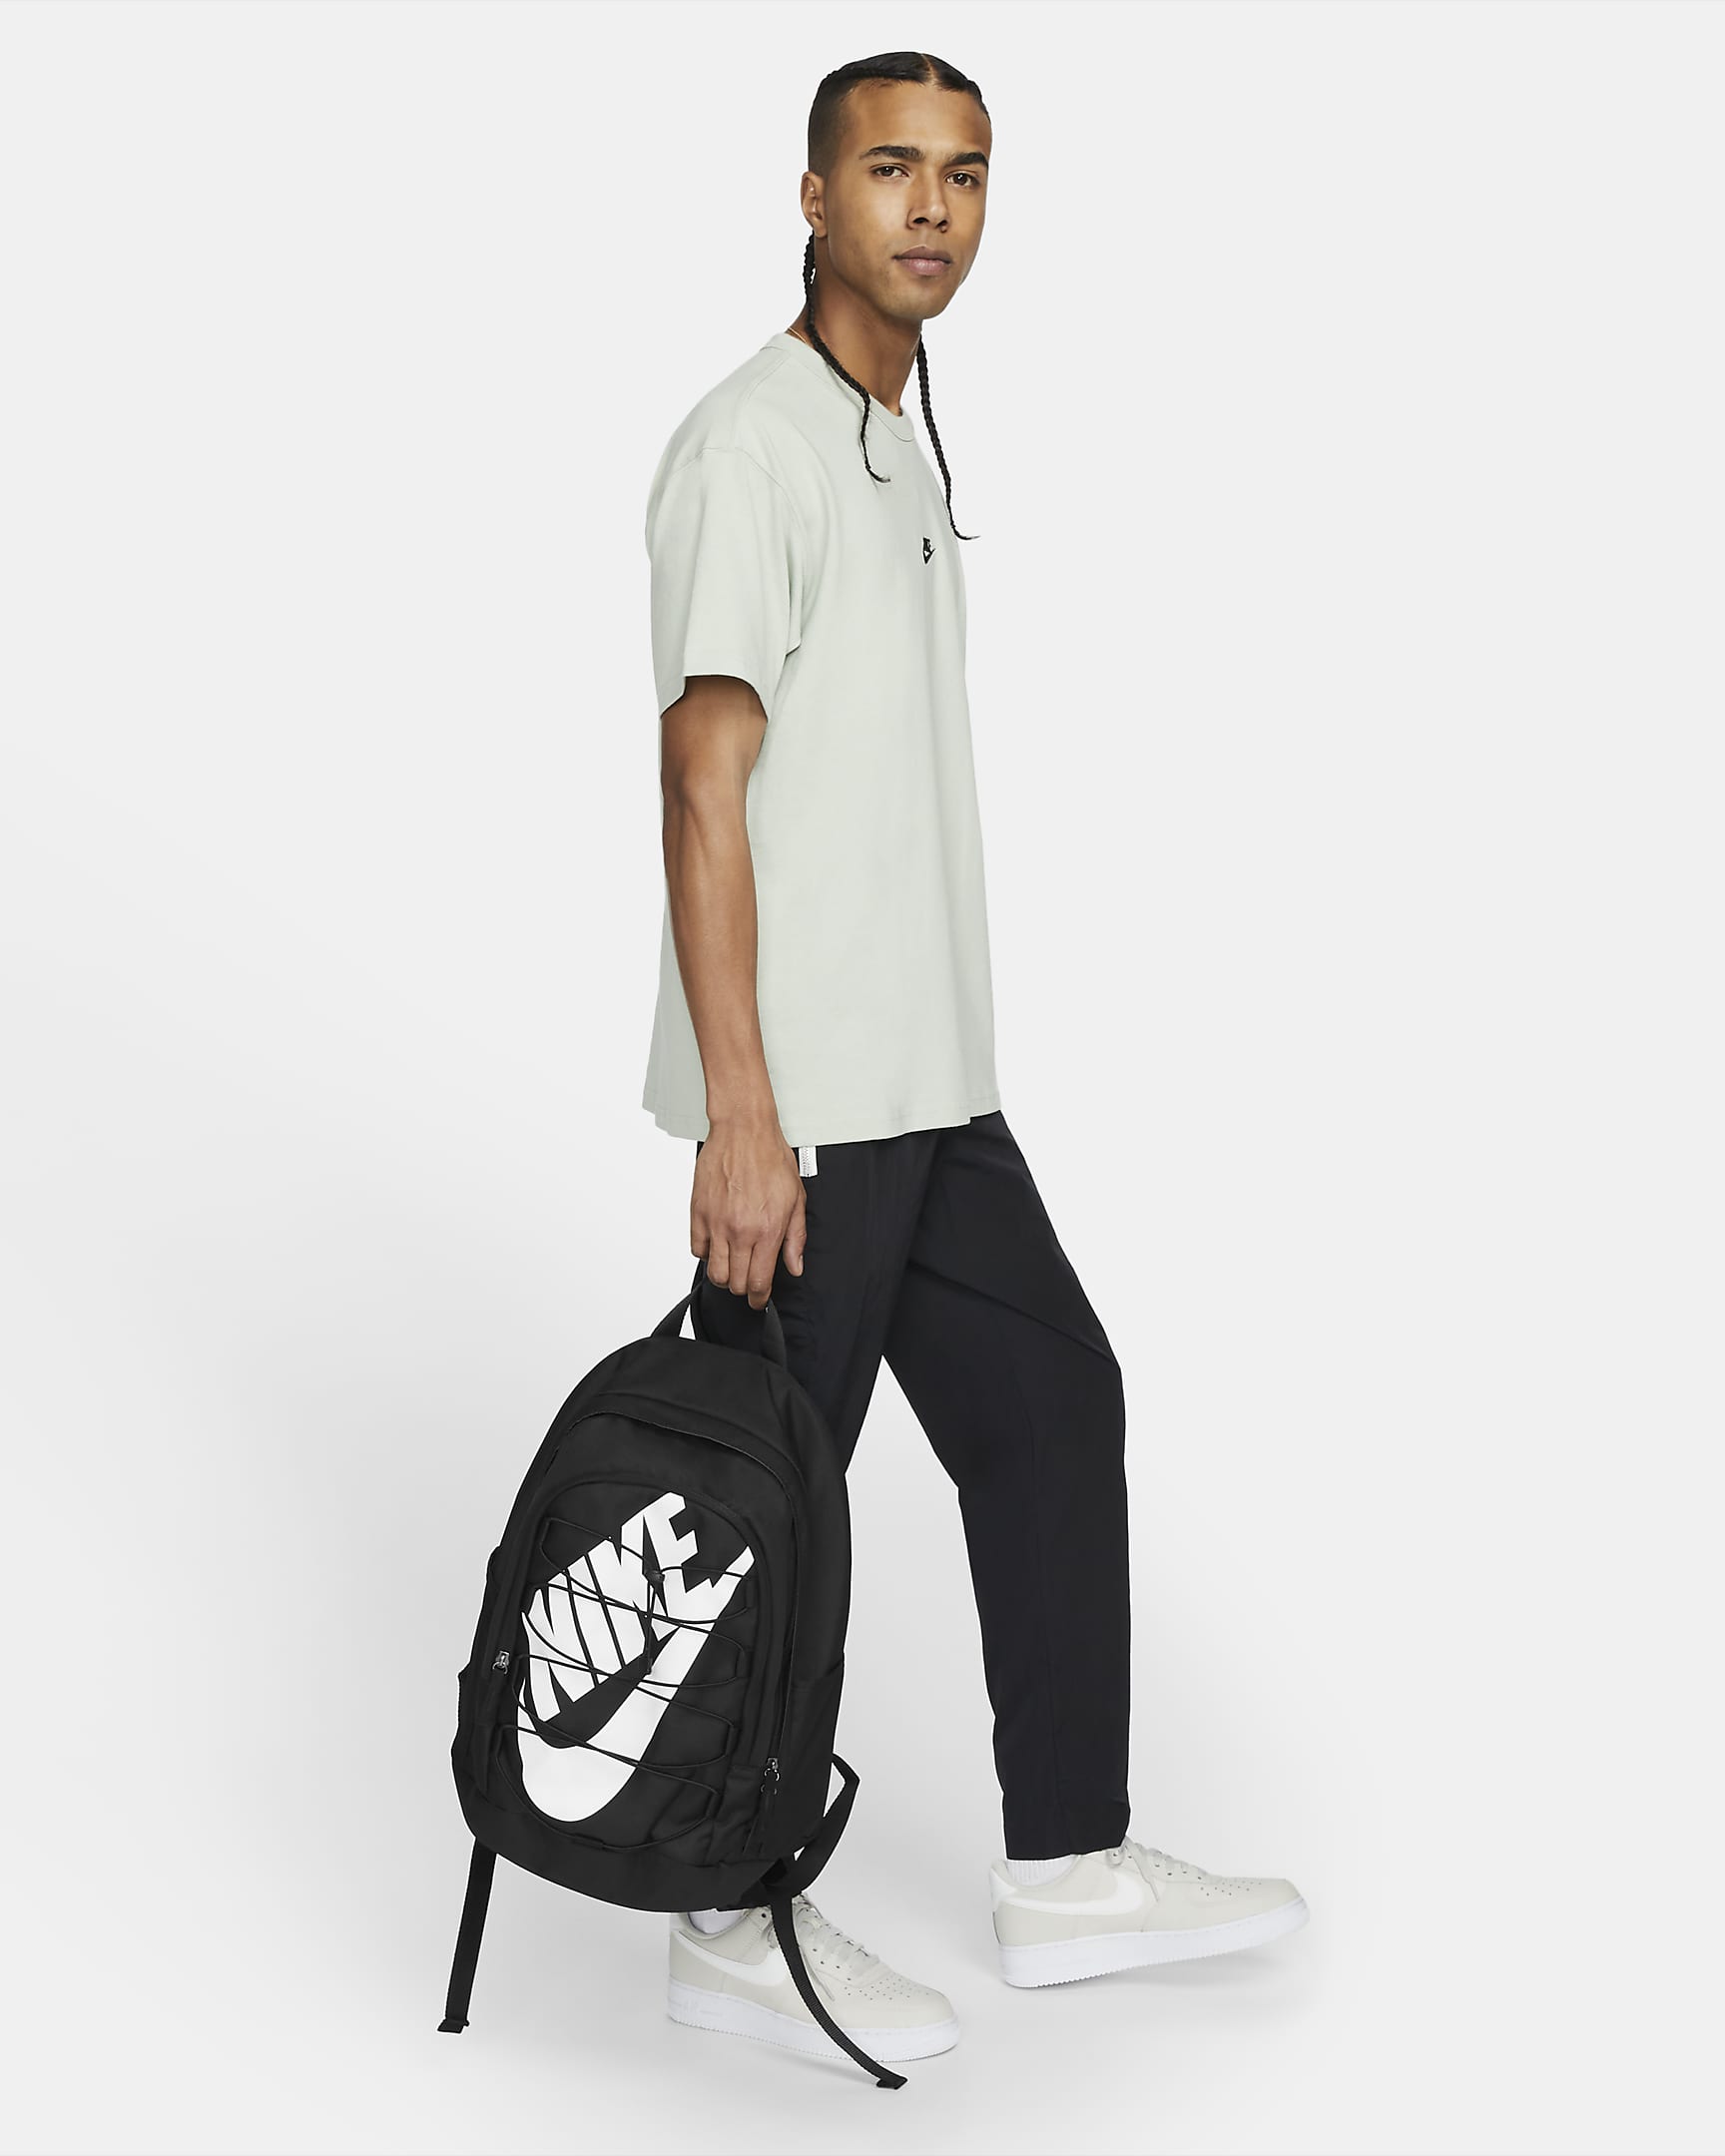 Nike Hayward Backpack (26L) - Black/Black/White